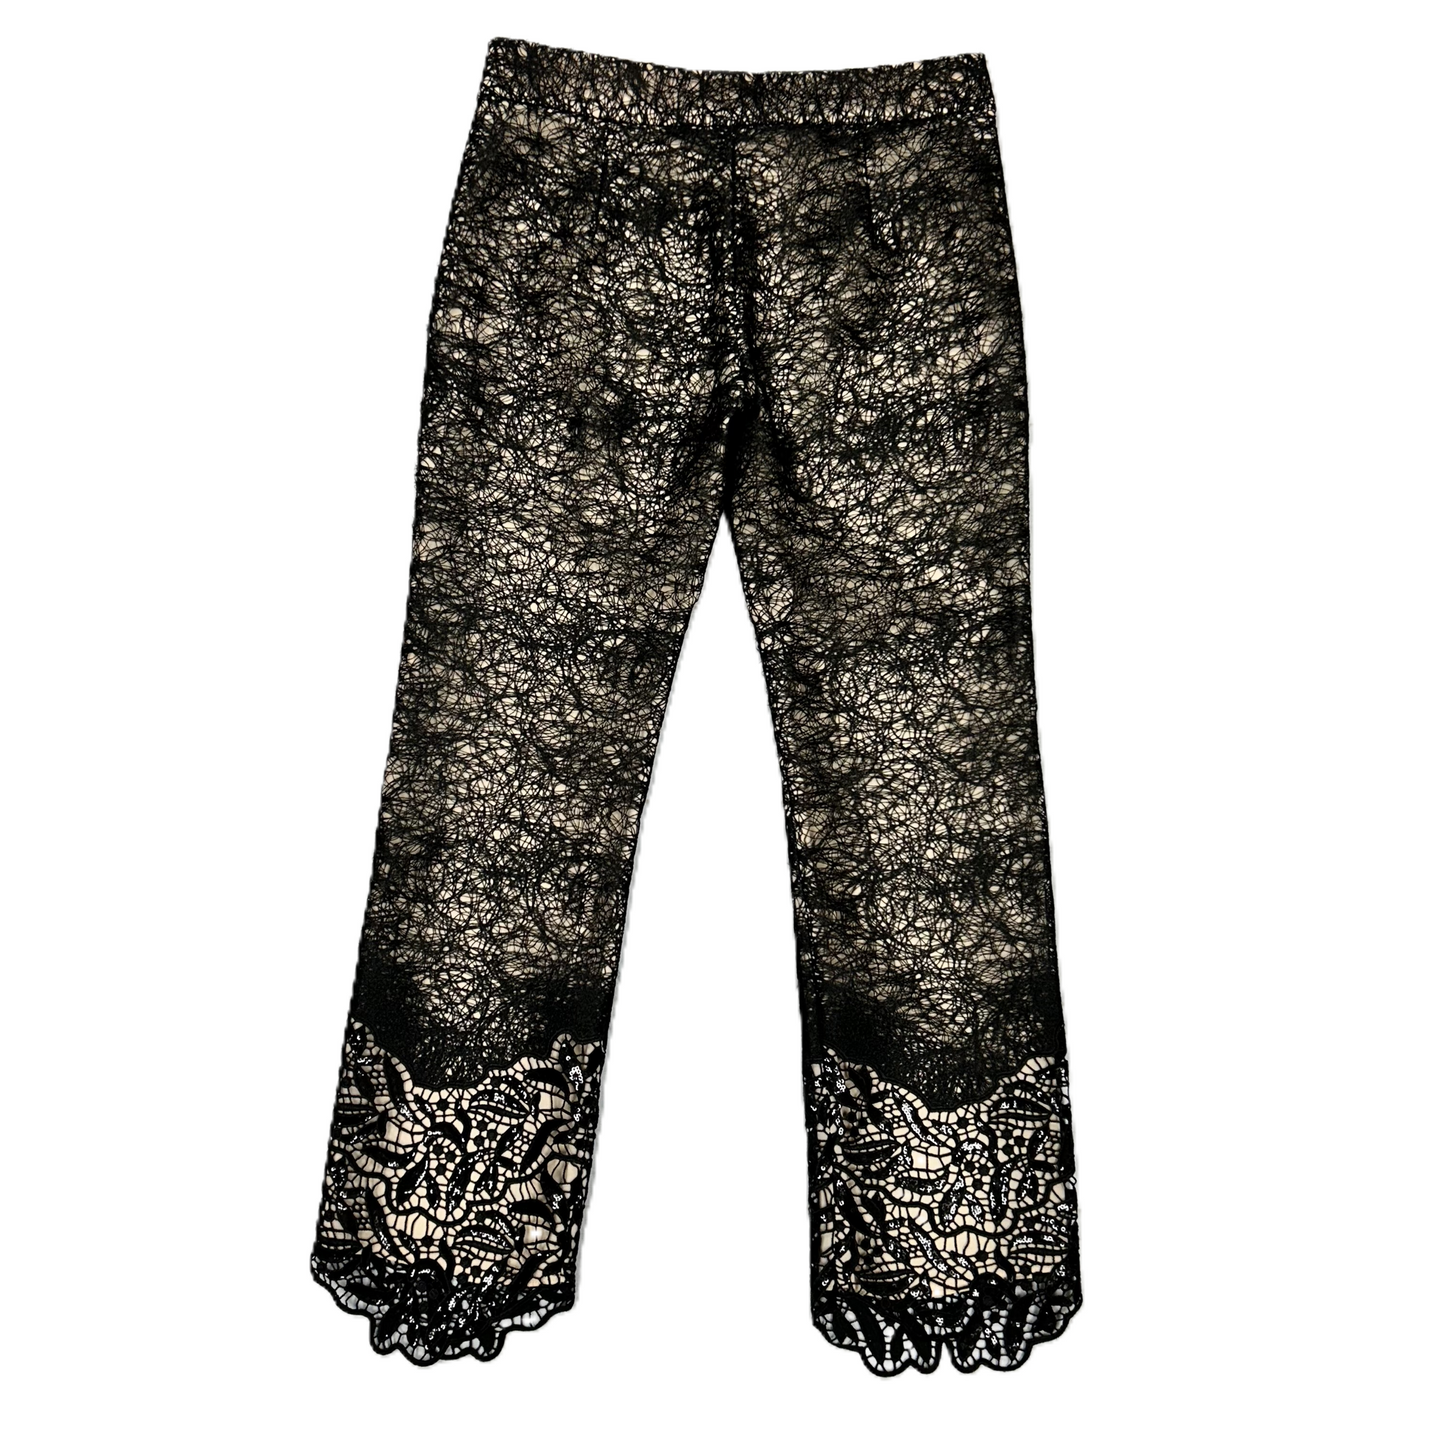 Black & Tan Pants Designer By Alexis, Size: S